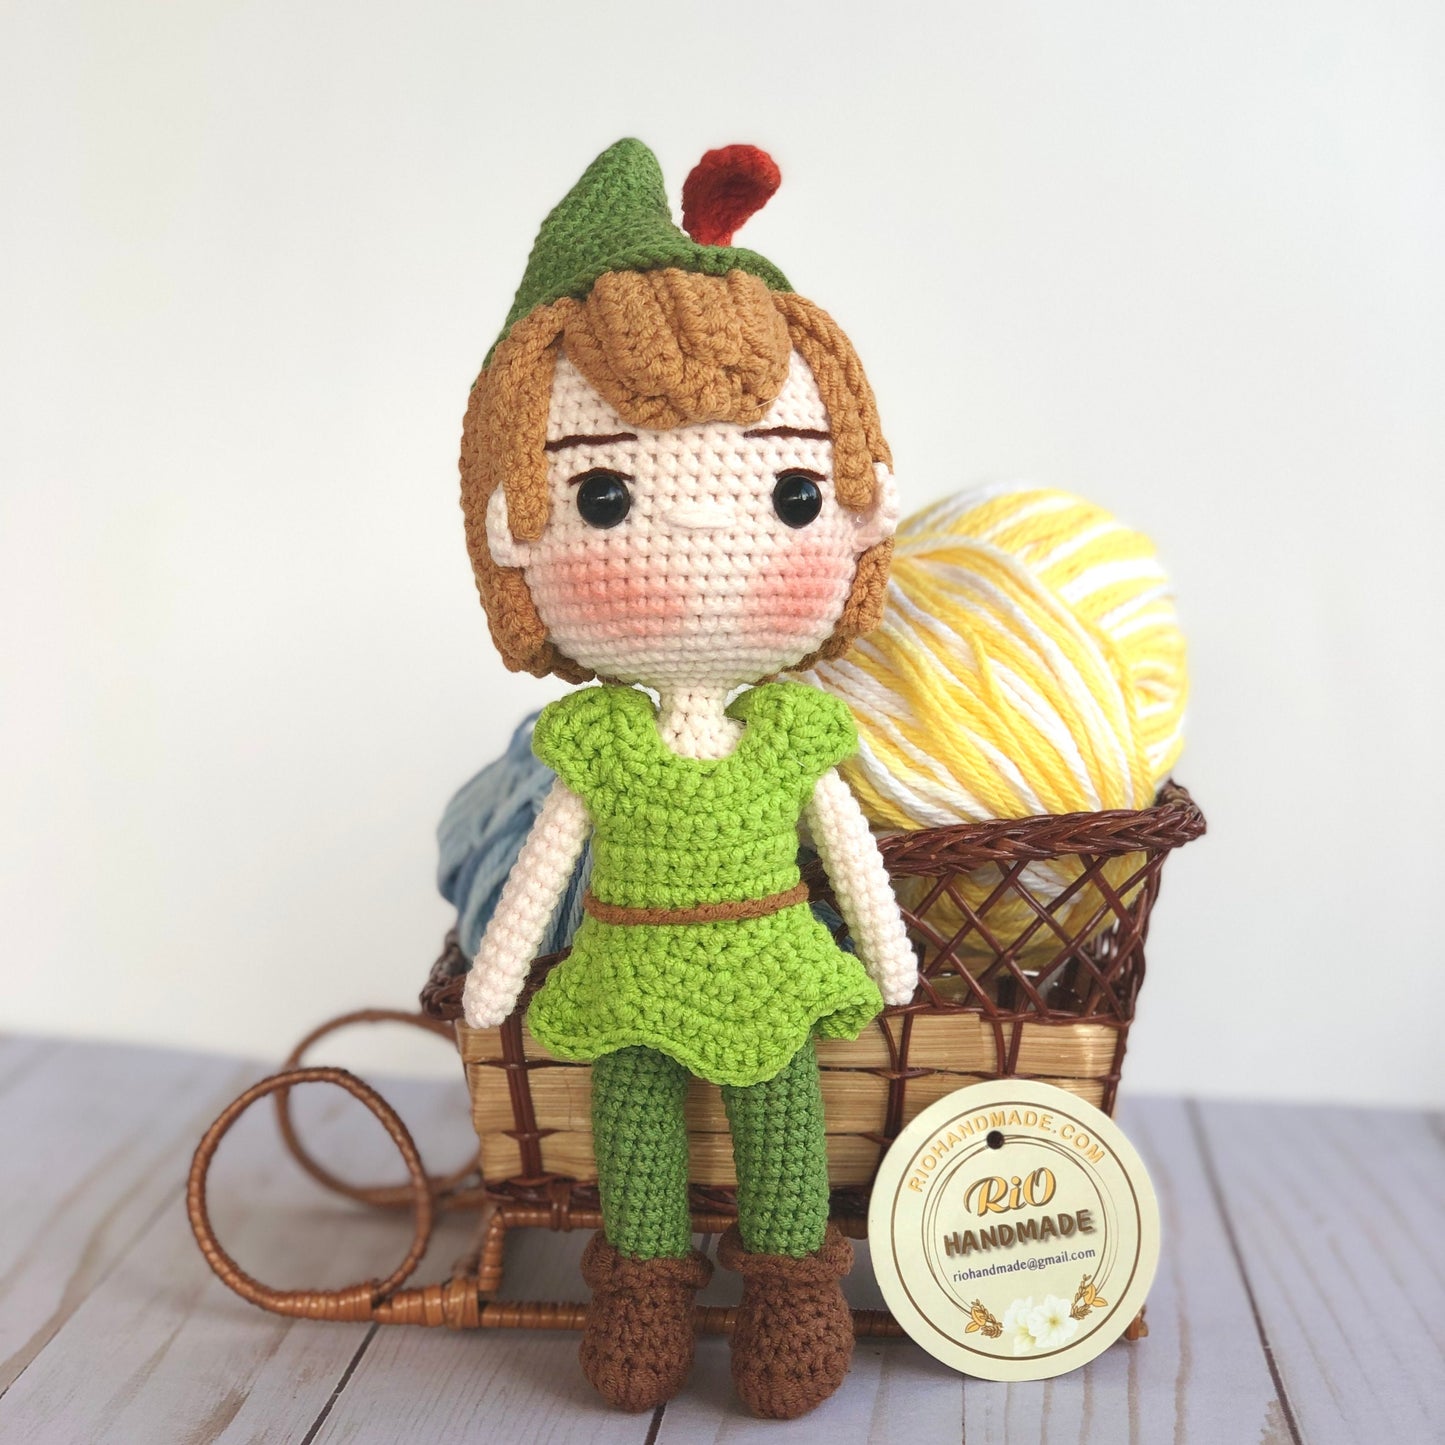 Handmade  animator Prince doll crochet, amigurumi, cute, soft toy for baby, toddler, kid, adult hobby